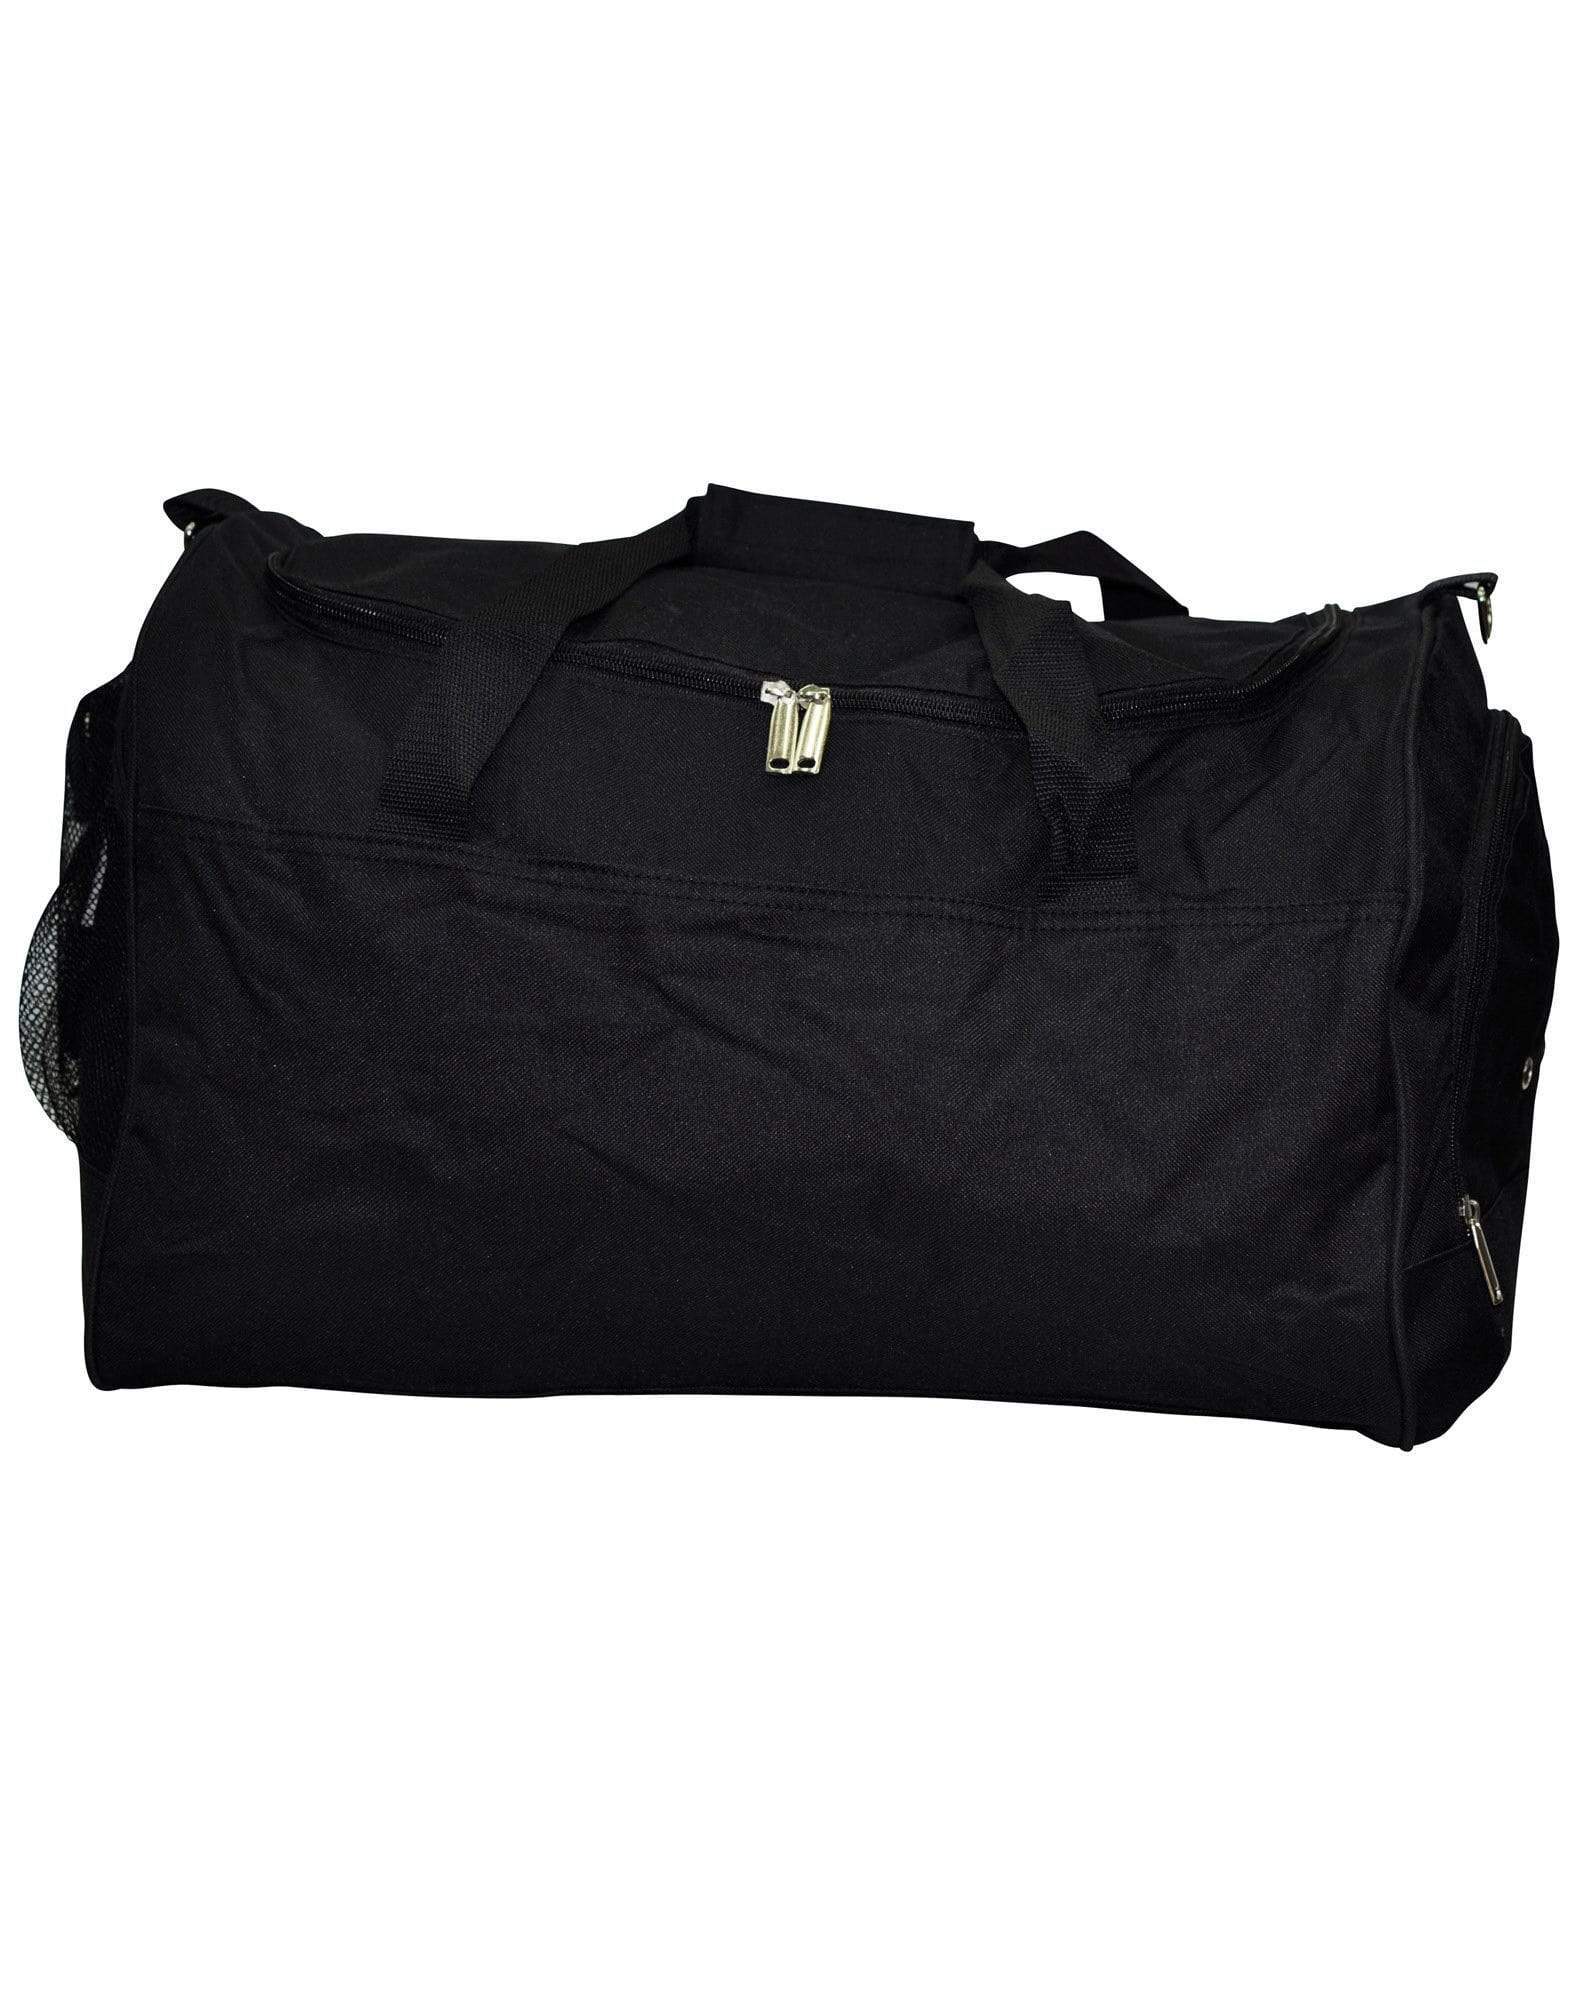 Basic Sports Bag B2000 Active Wear Winning Spirit Black "(w)51cm x (h)35cm x (d)38cm, 67.8 Litres Capacity" 